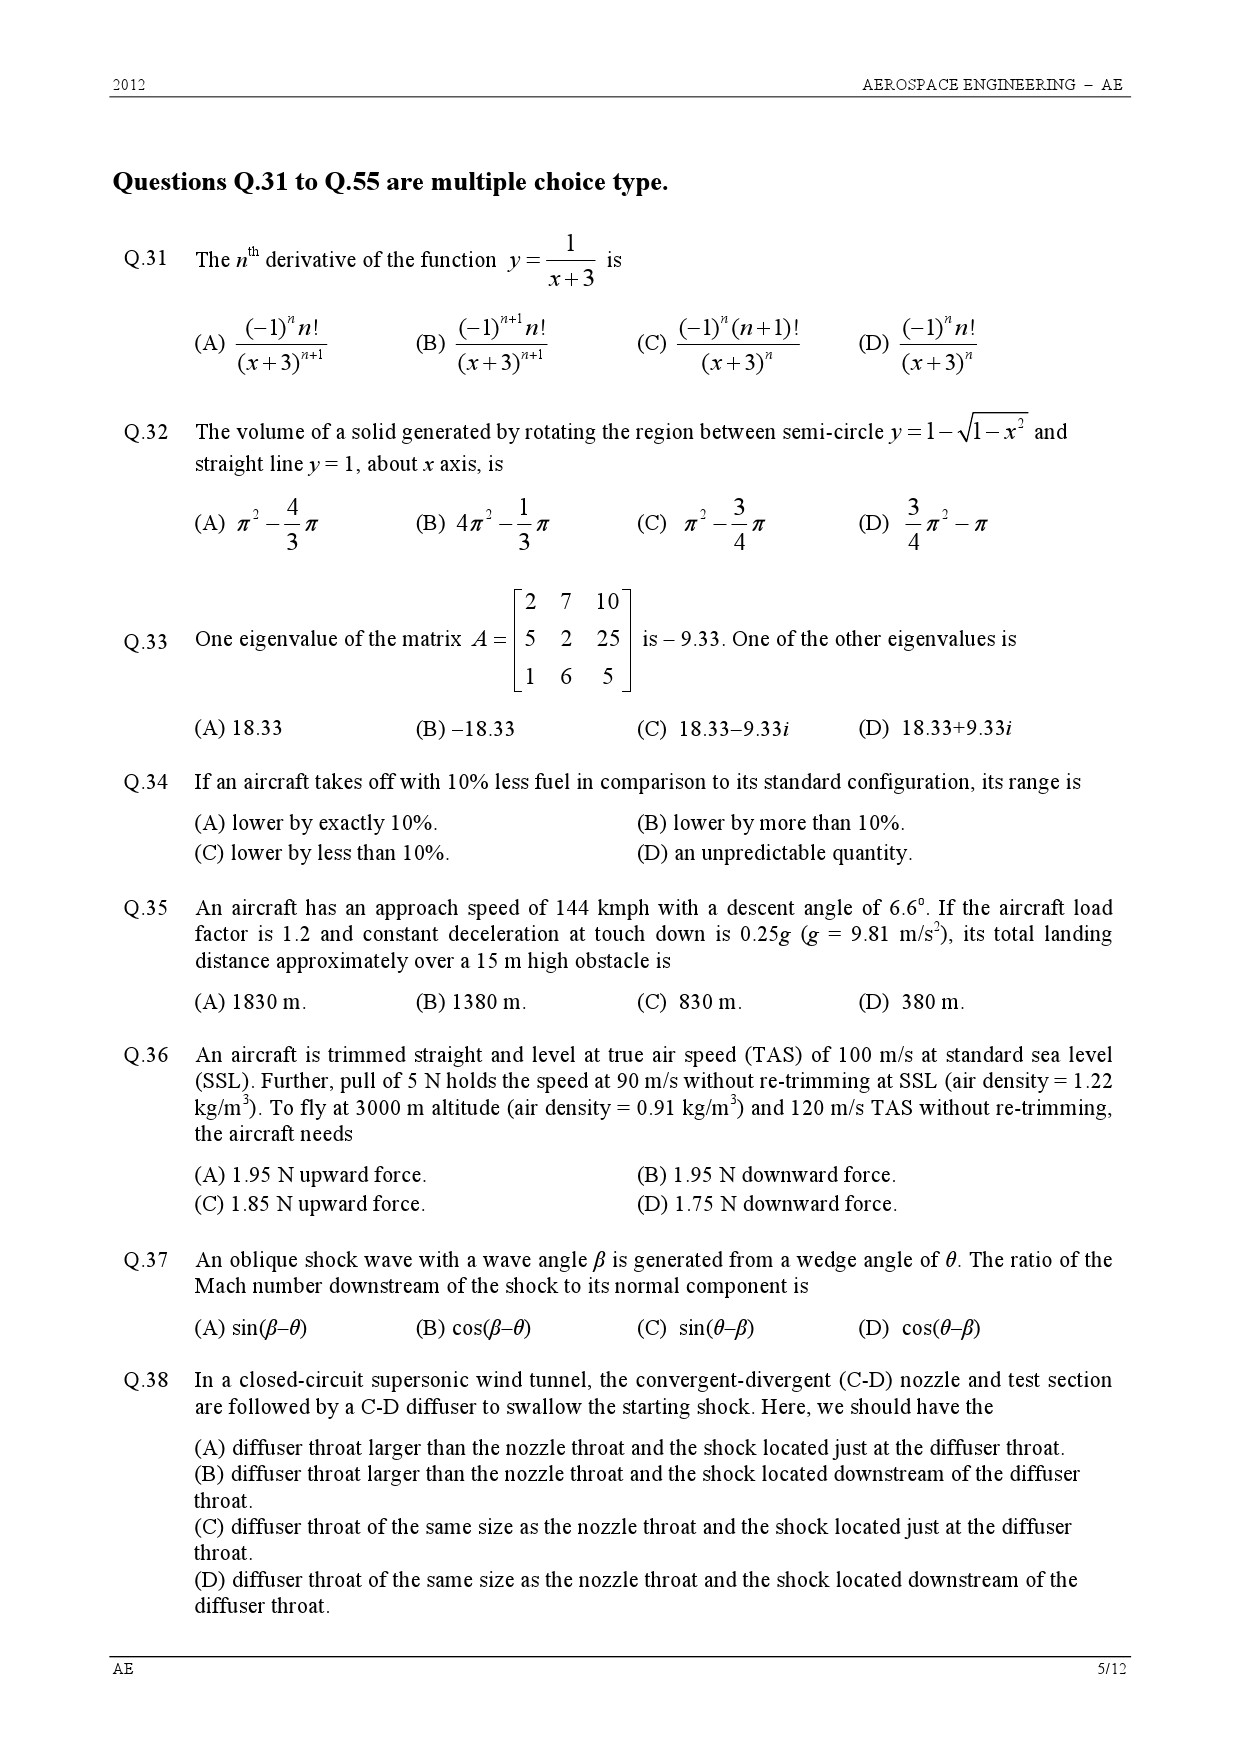 GATE Exam 2012 Aerospace Engineering Question Paper 5